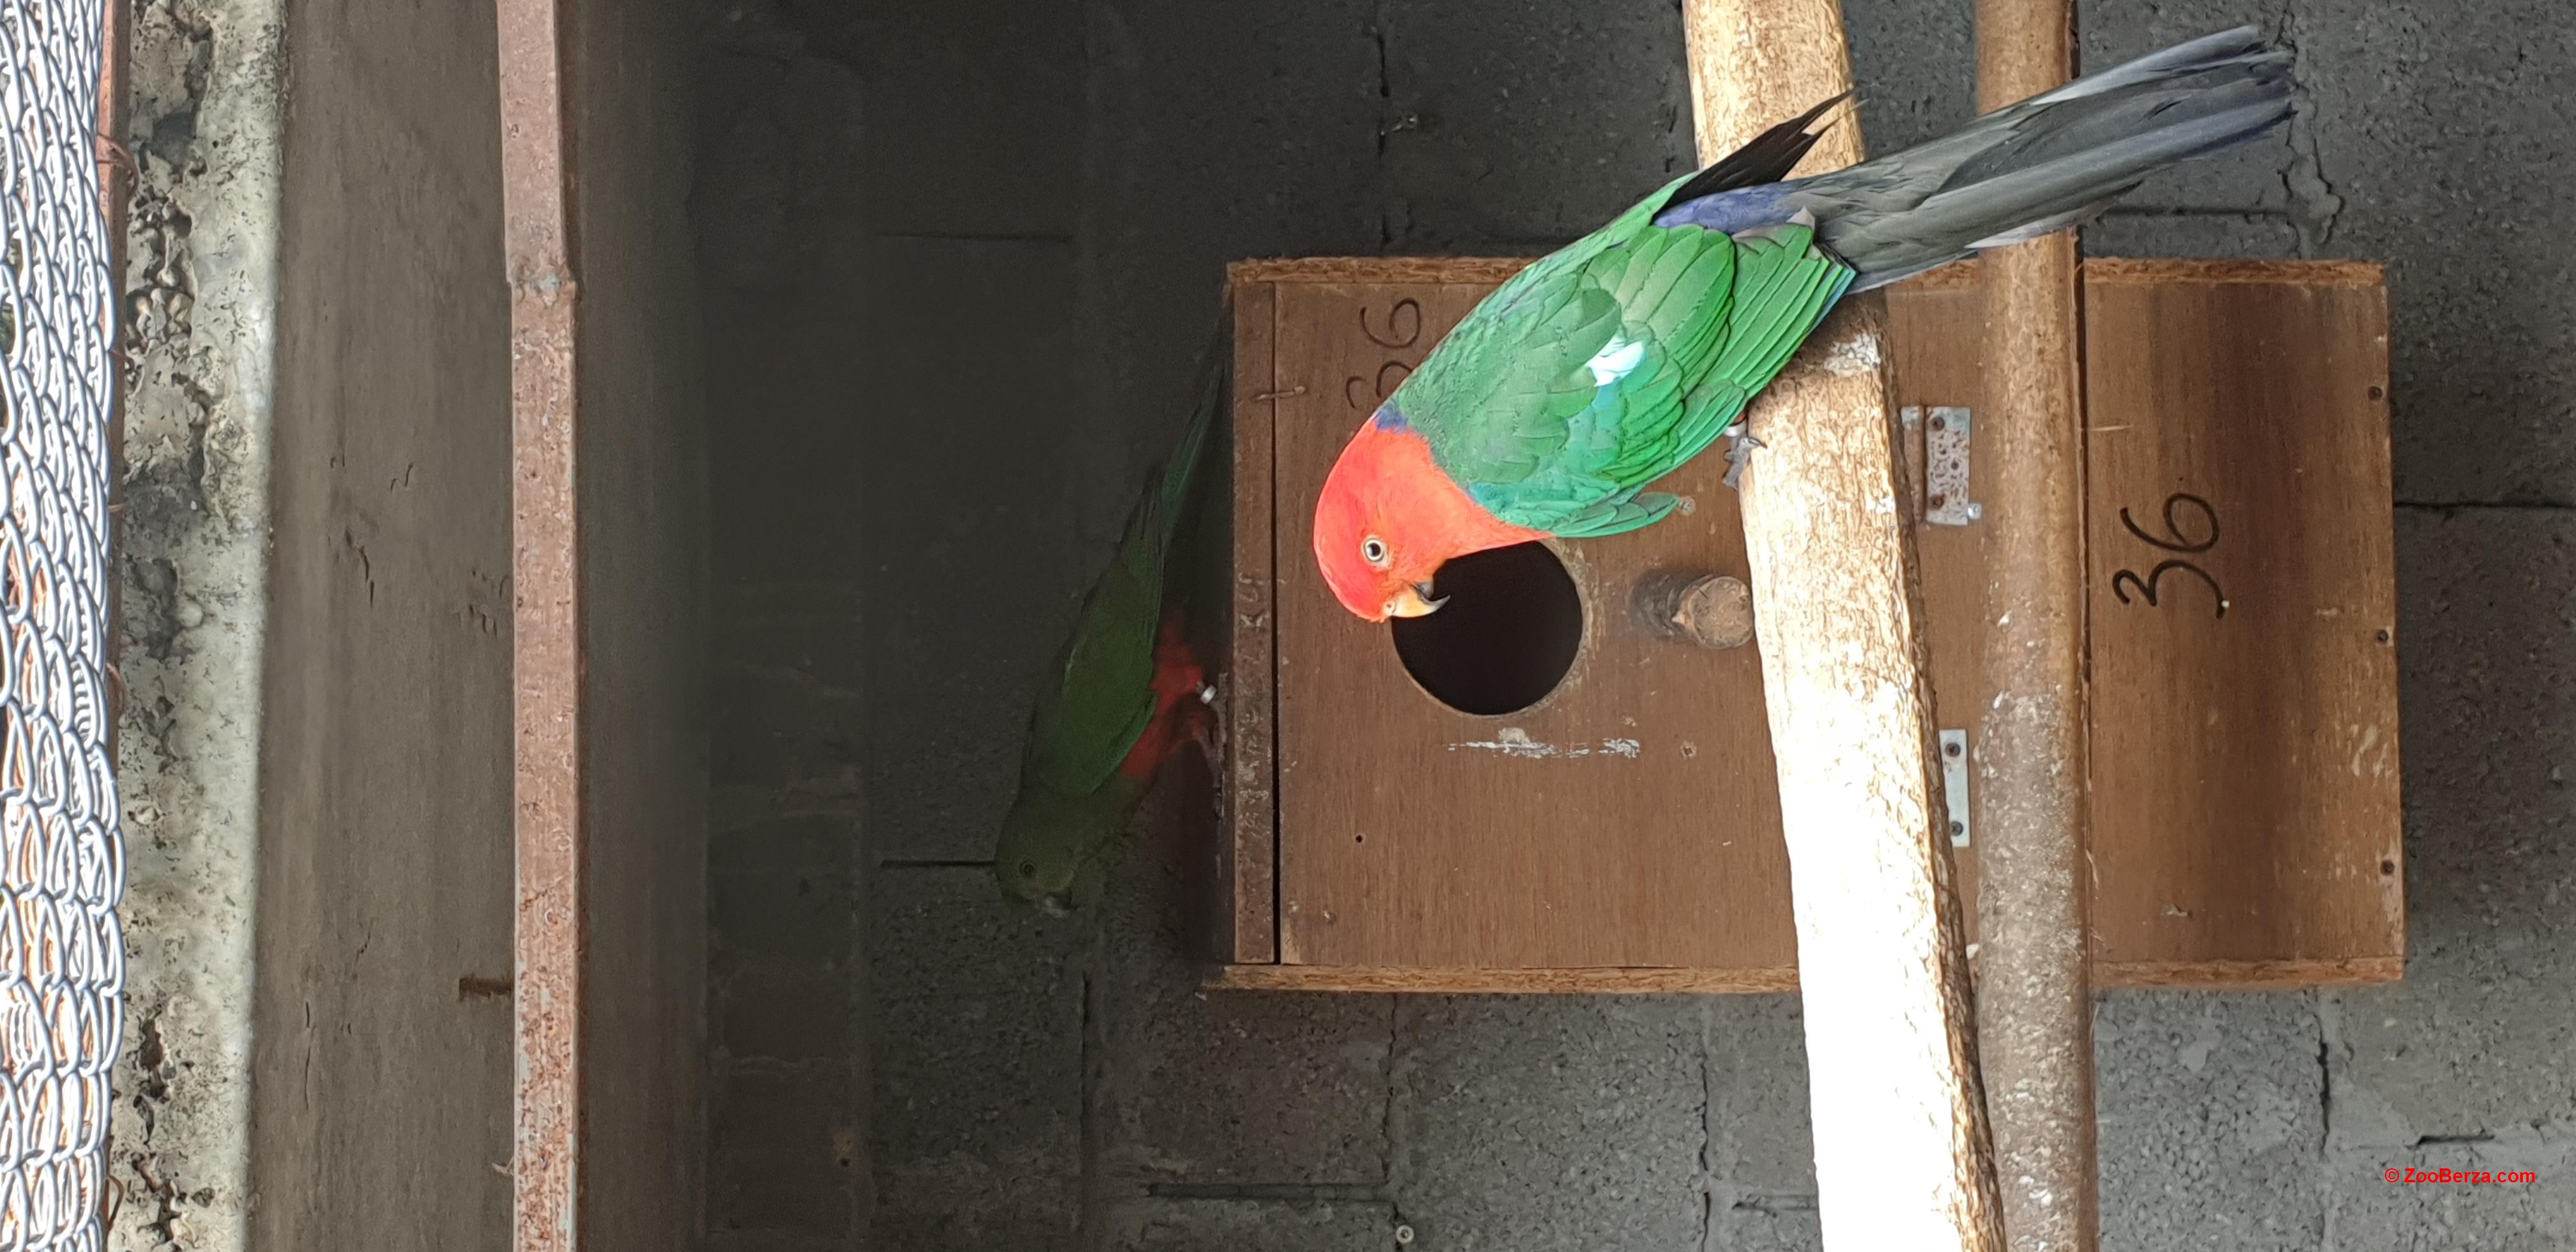 kraljevski papagaji